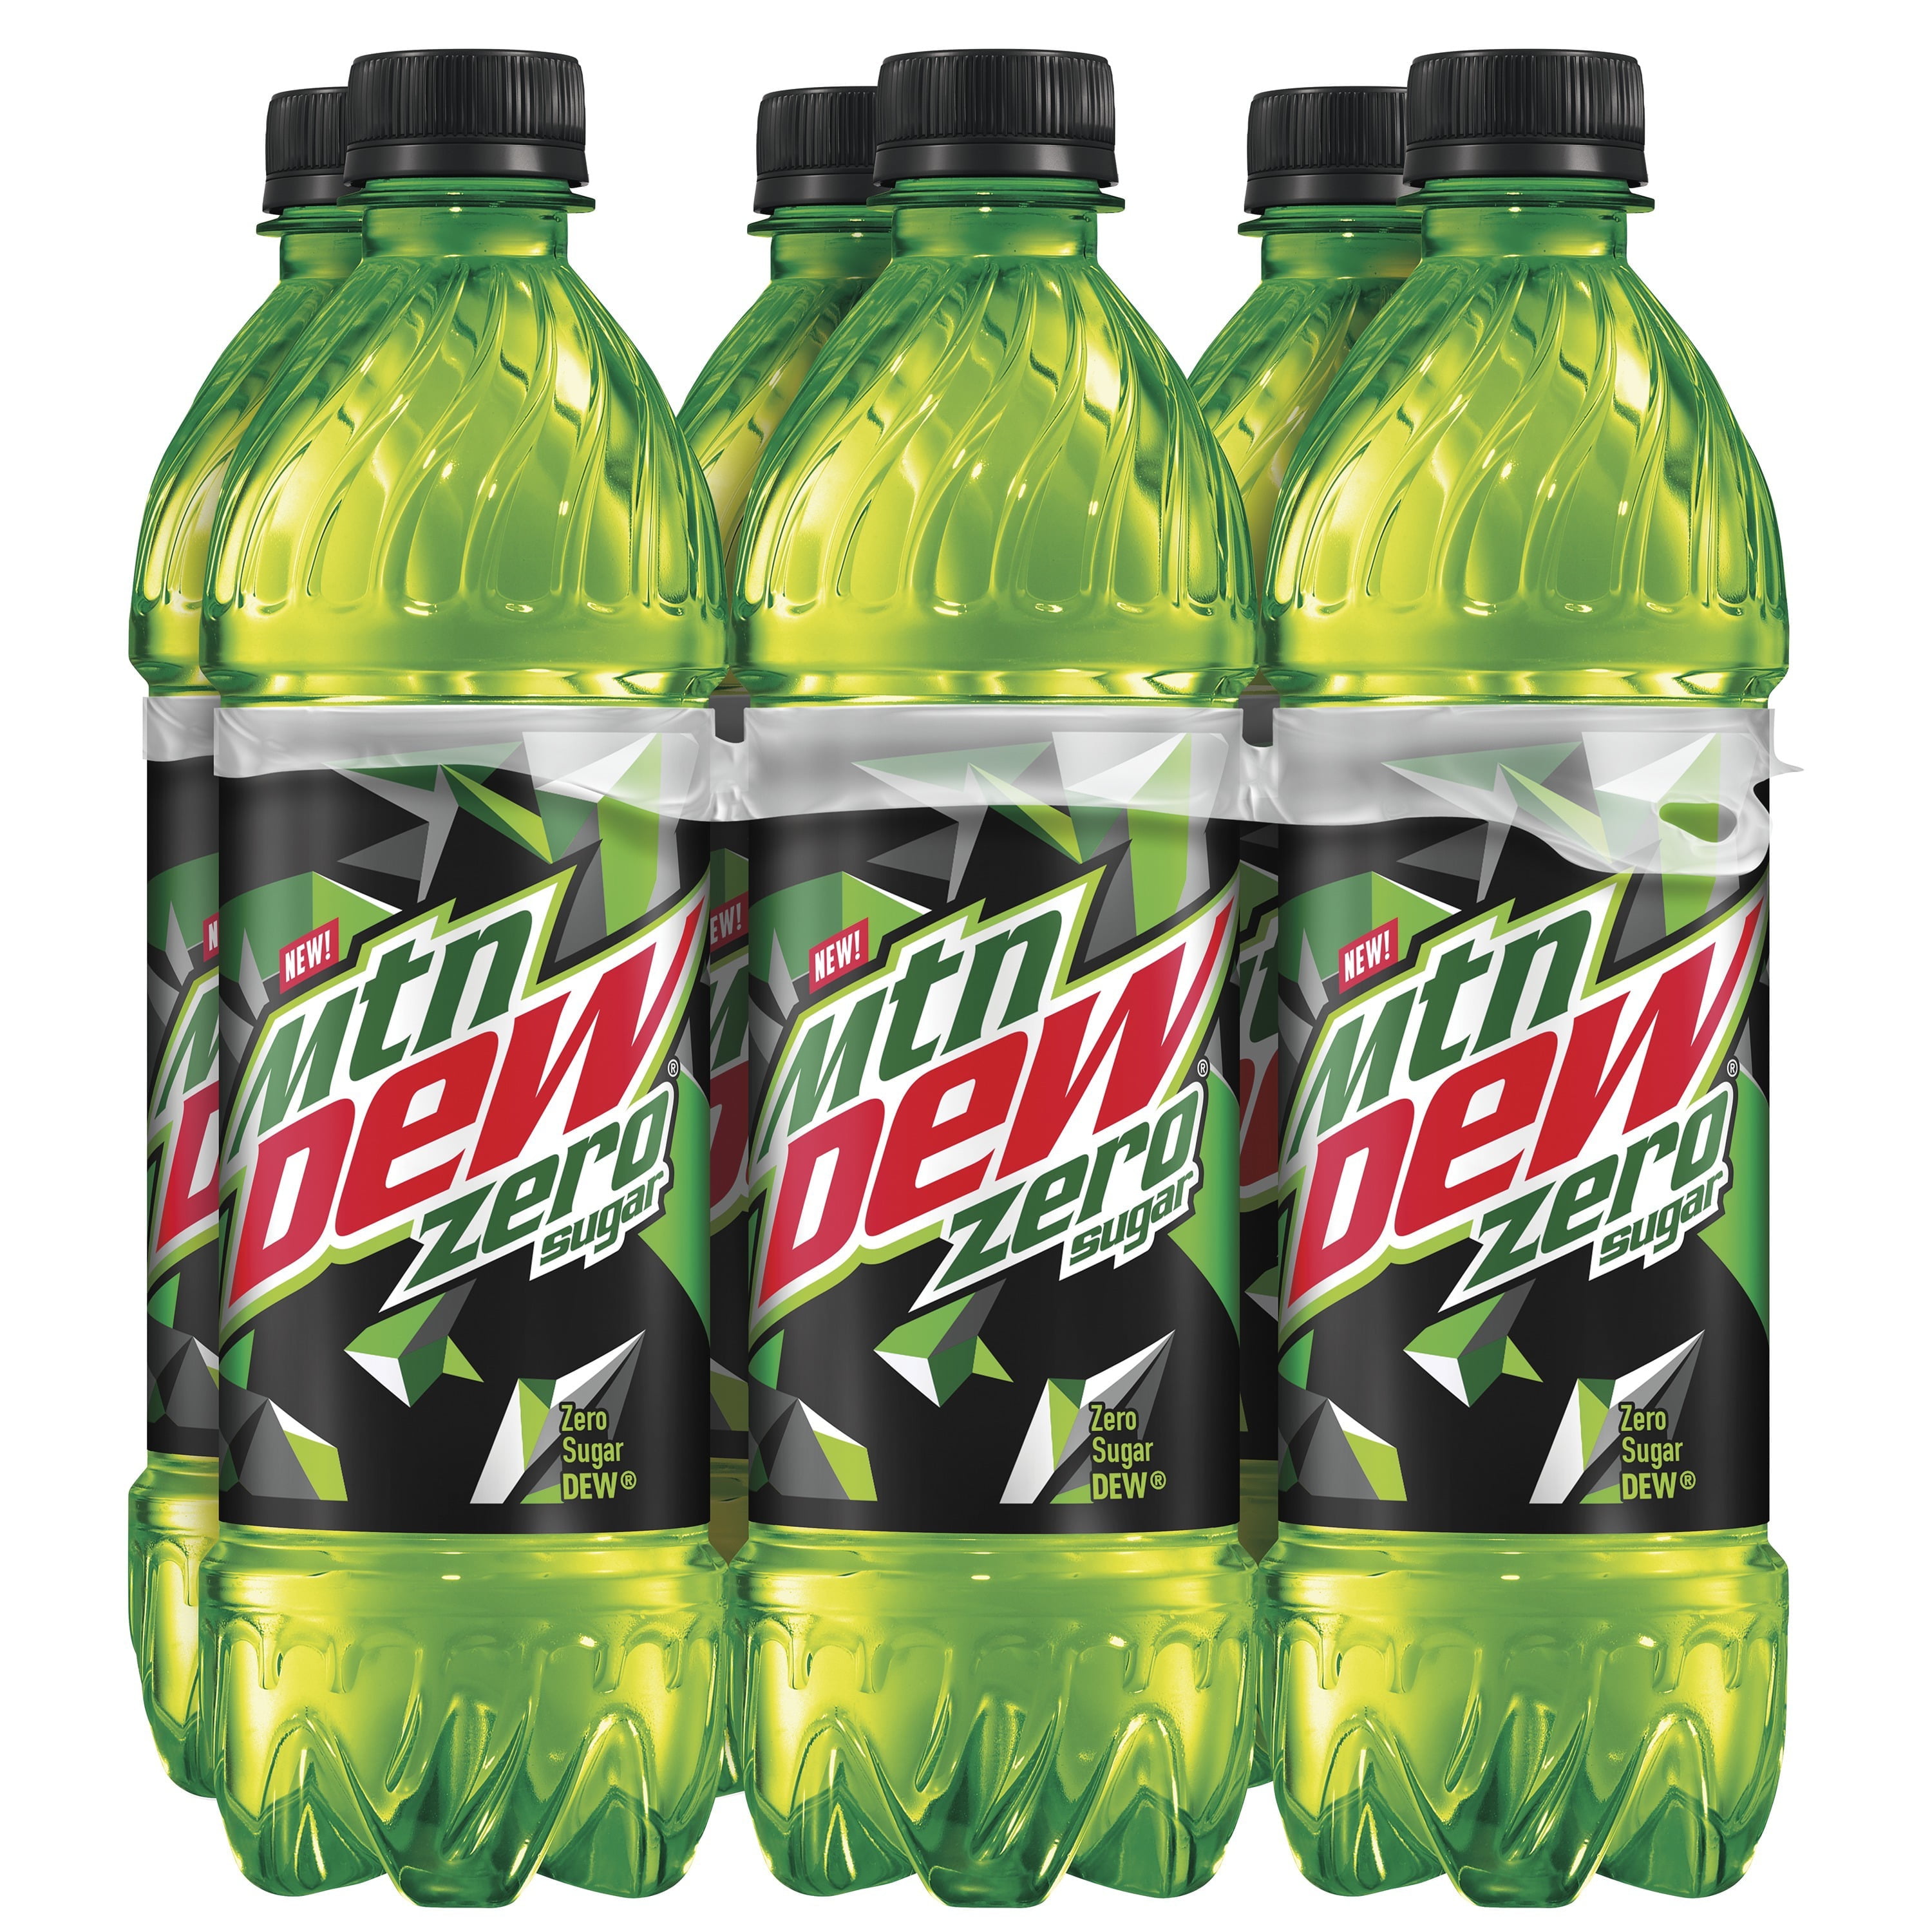 Mountain Dew Zero Sugar Citrus Soda Pop, 16.9 oz, 6 Pack Bottles